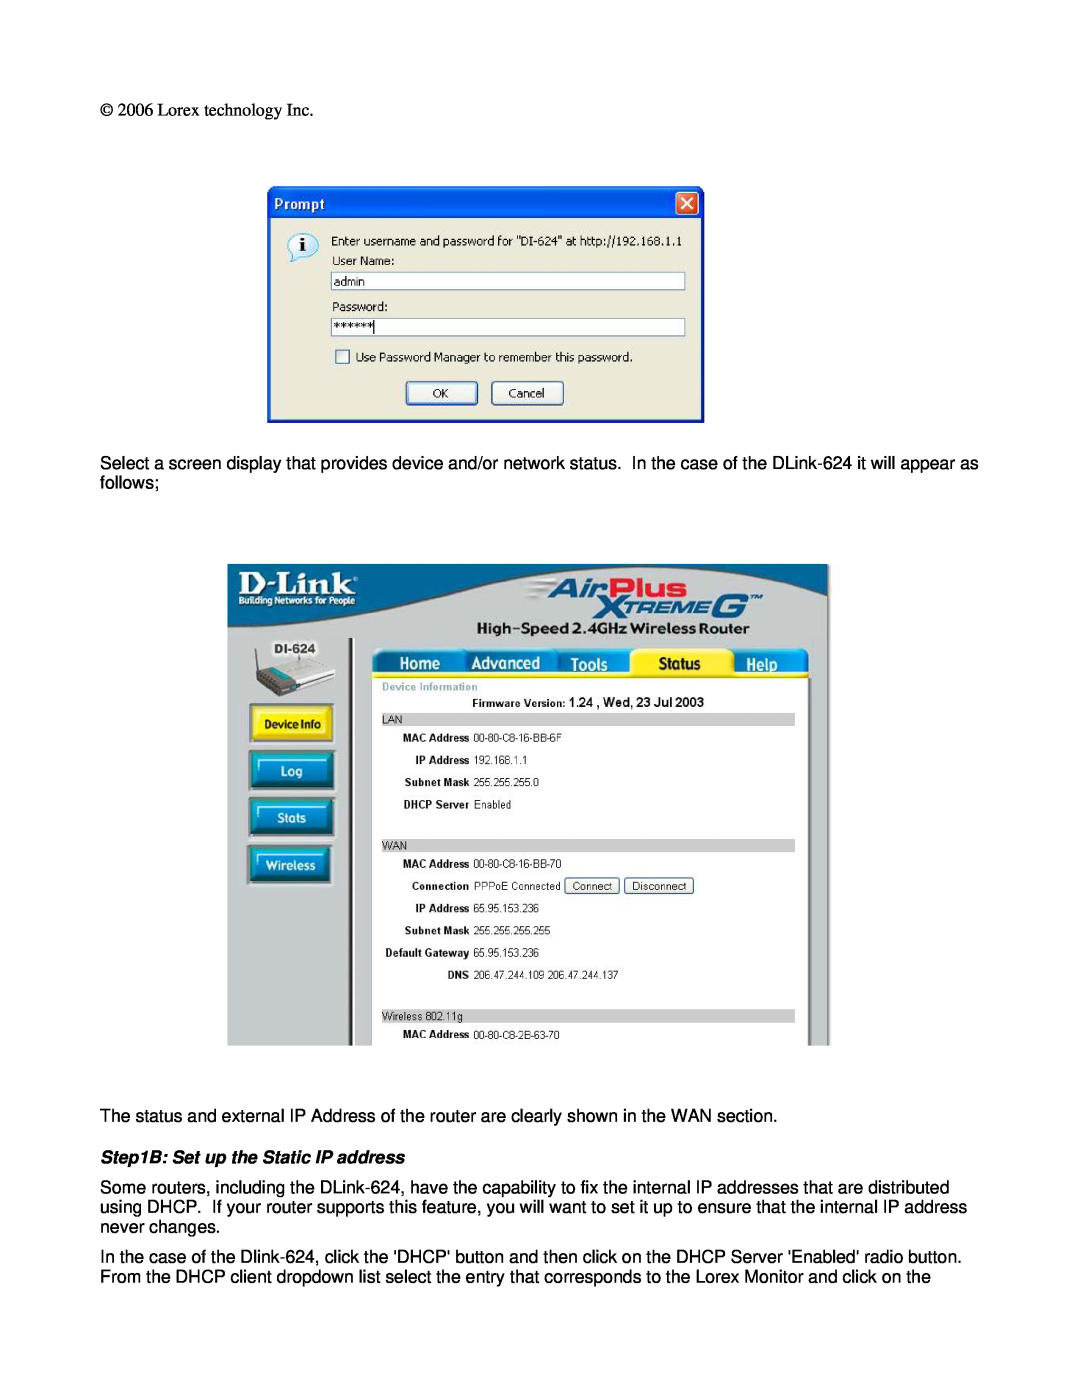 LOREX Technology Dlink DI-624 setup guide B Set up the Static IP address 